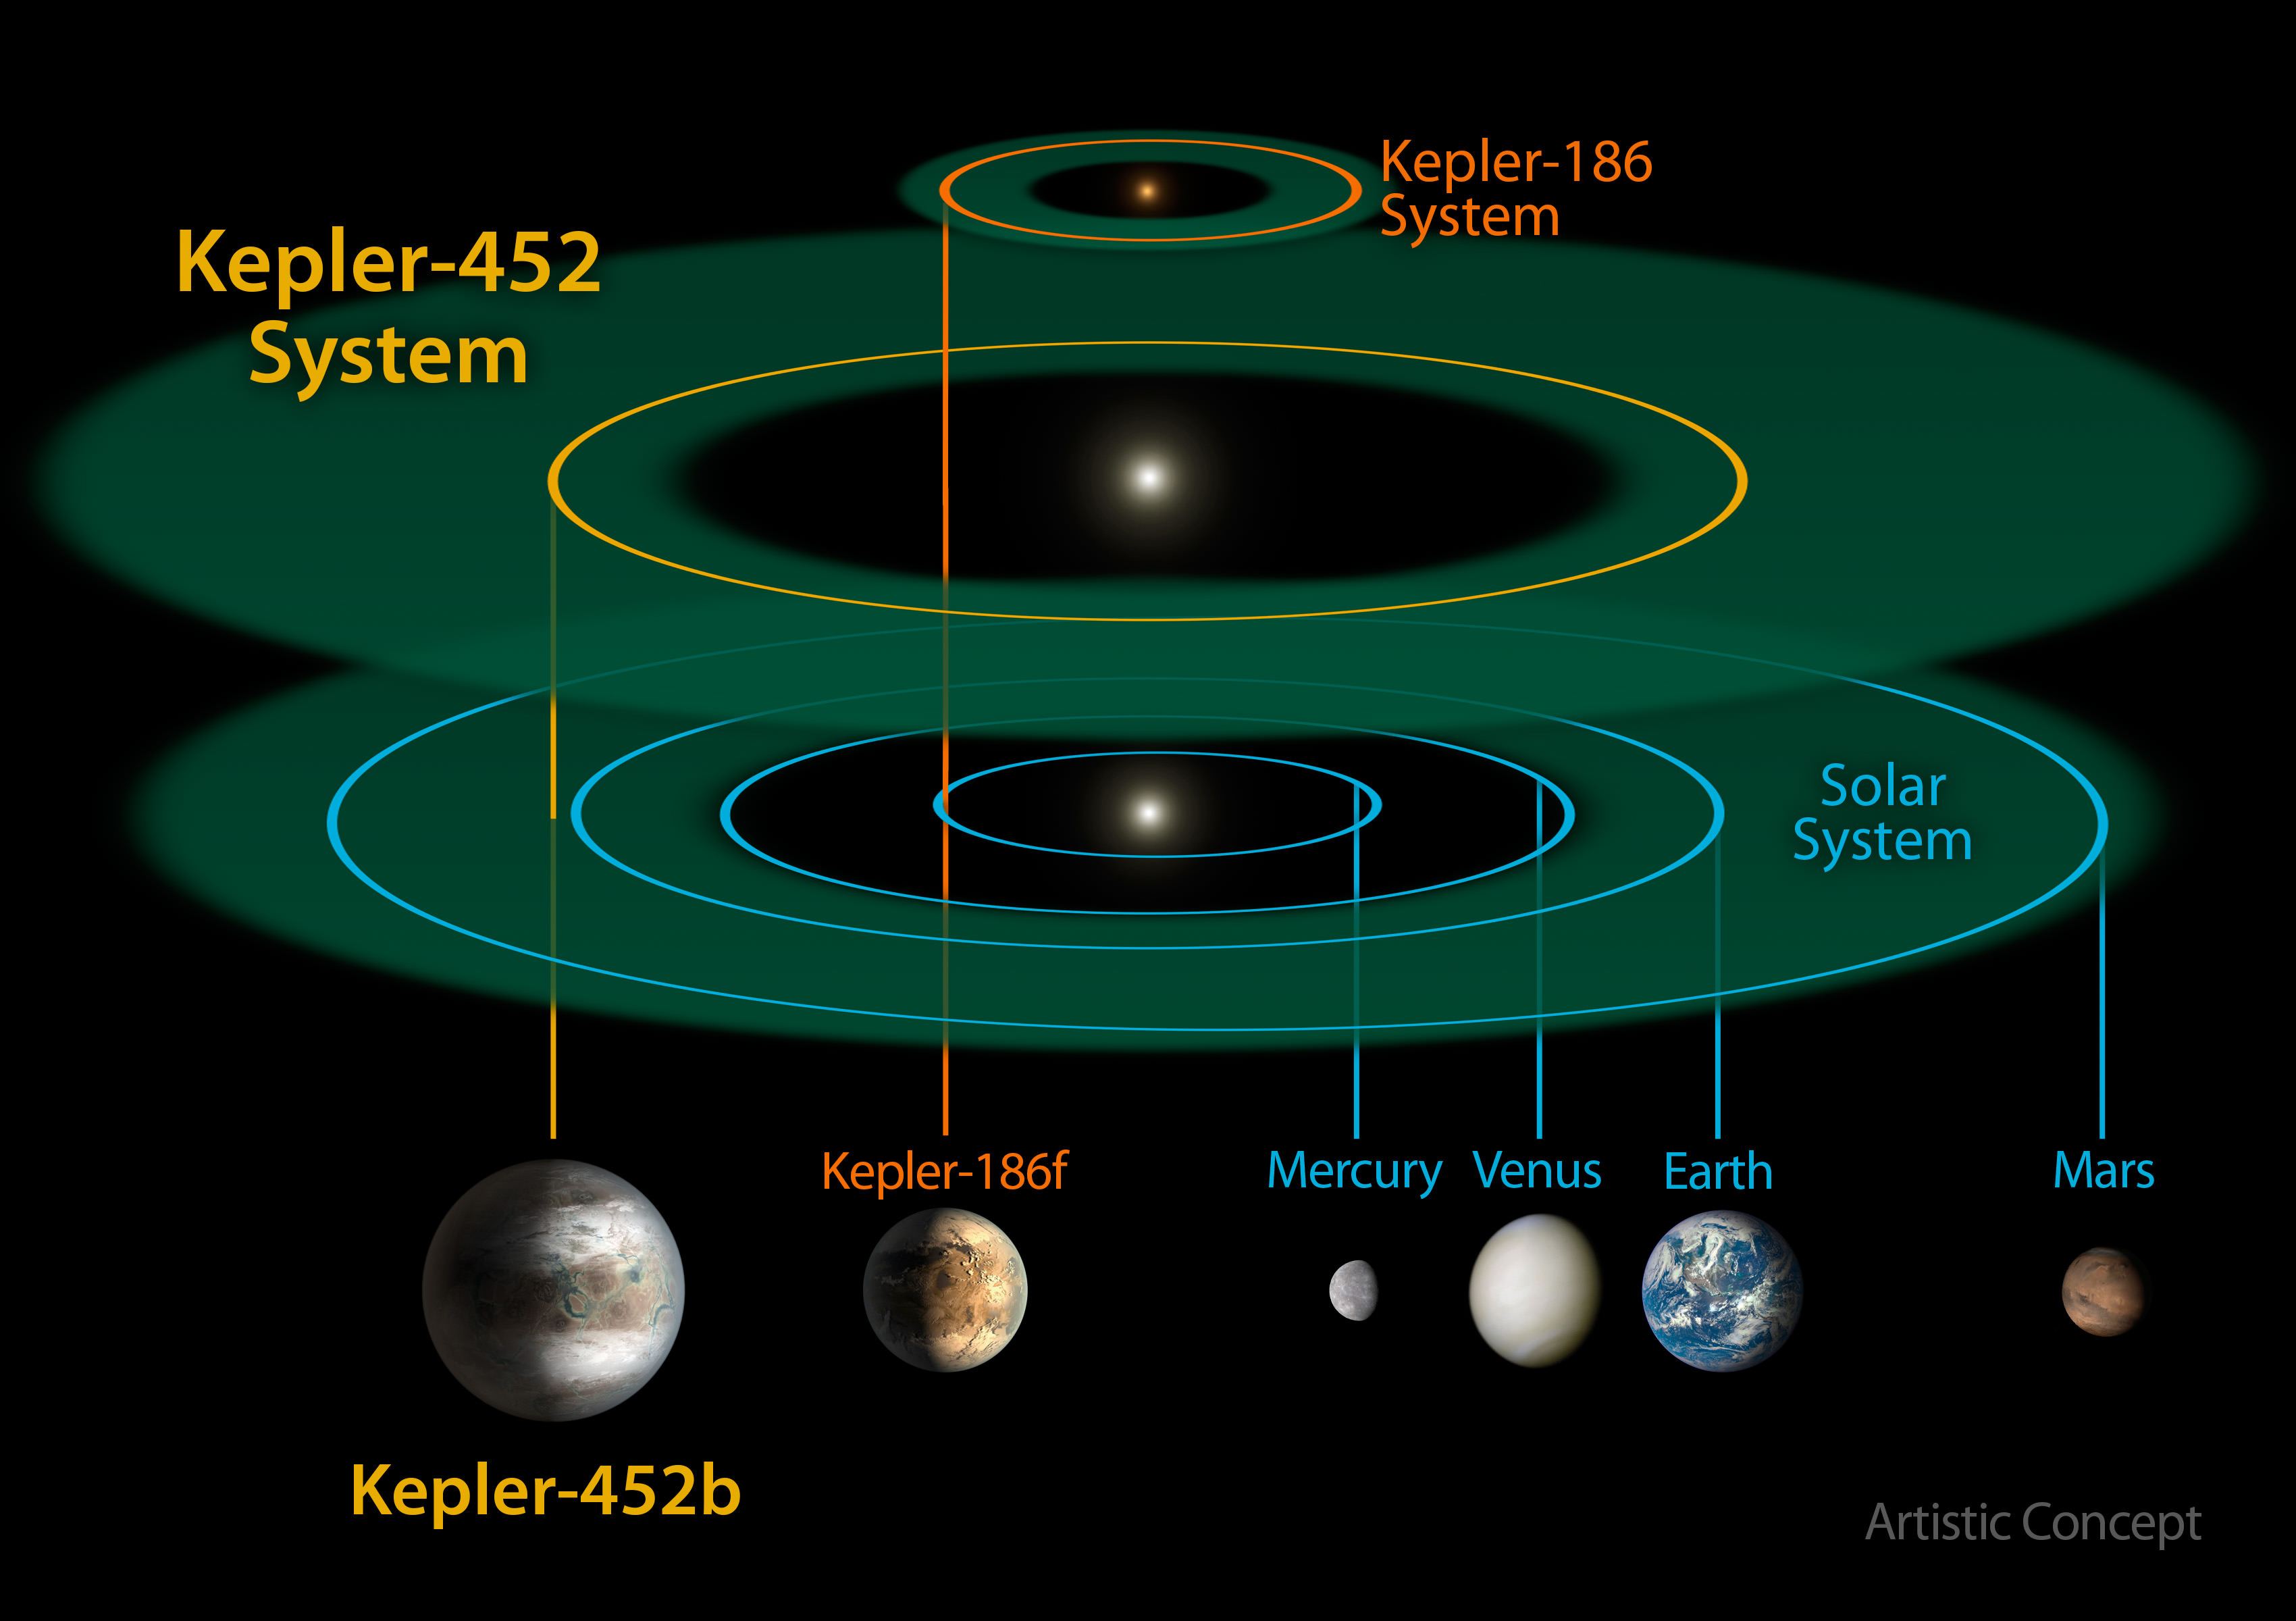 Planetary system comparison